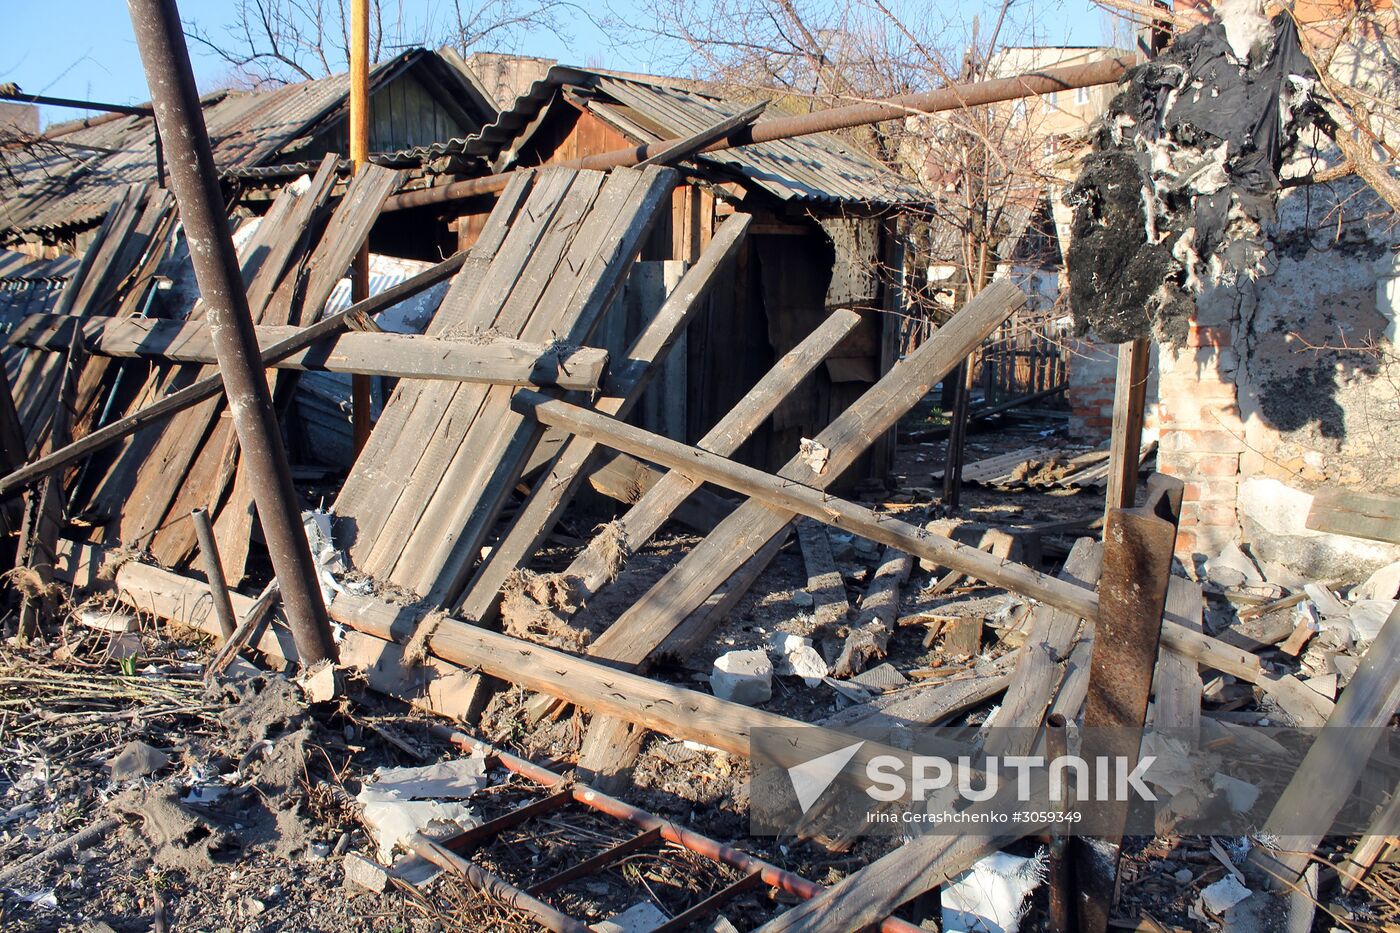 Donetsk shelling aftermath